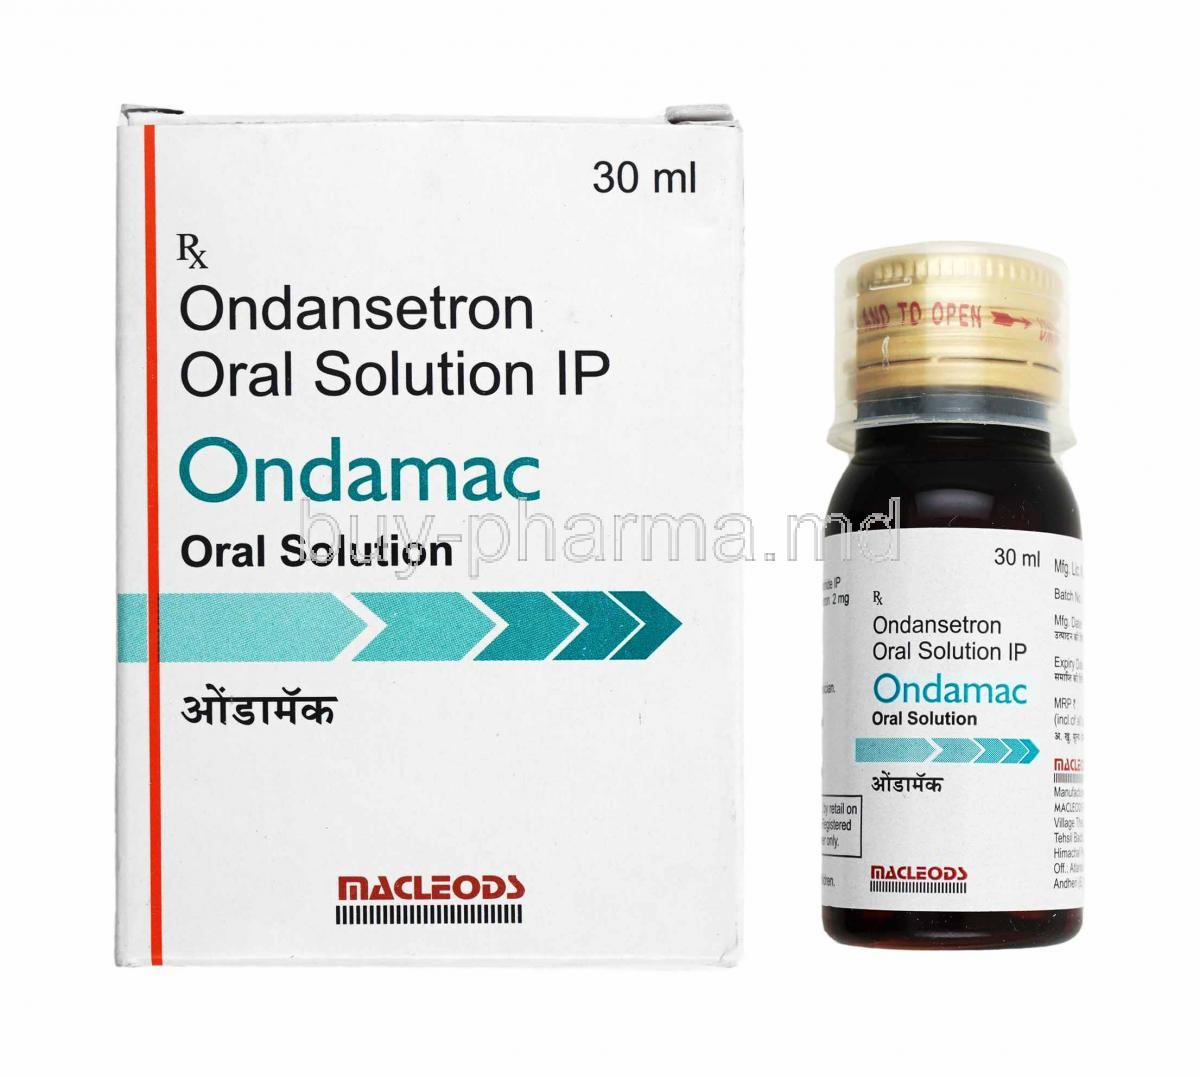 Ondamac Oral Suspension, Ondansetron box and bottle